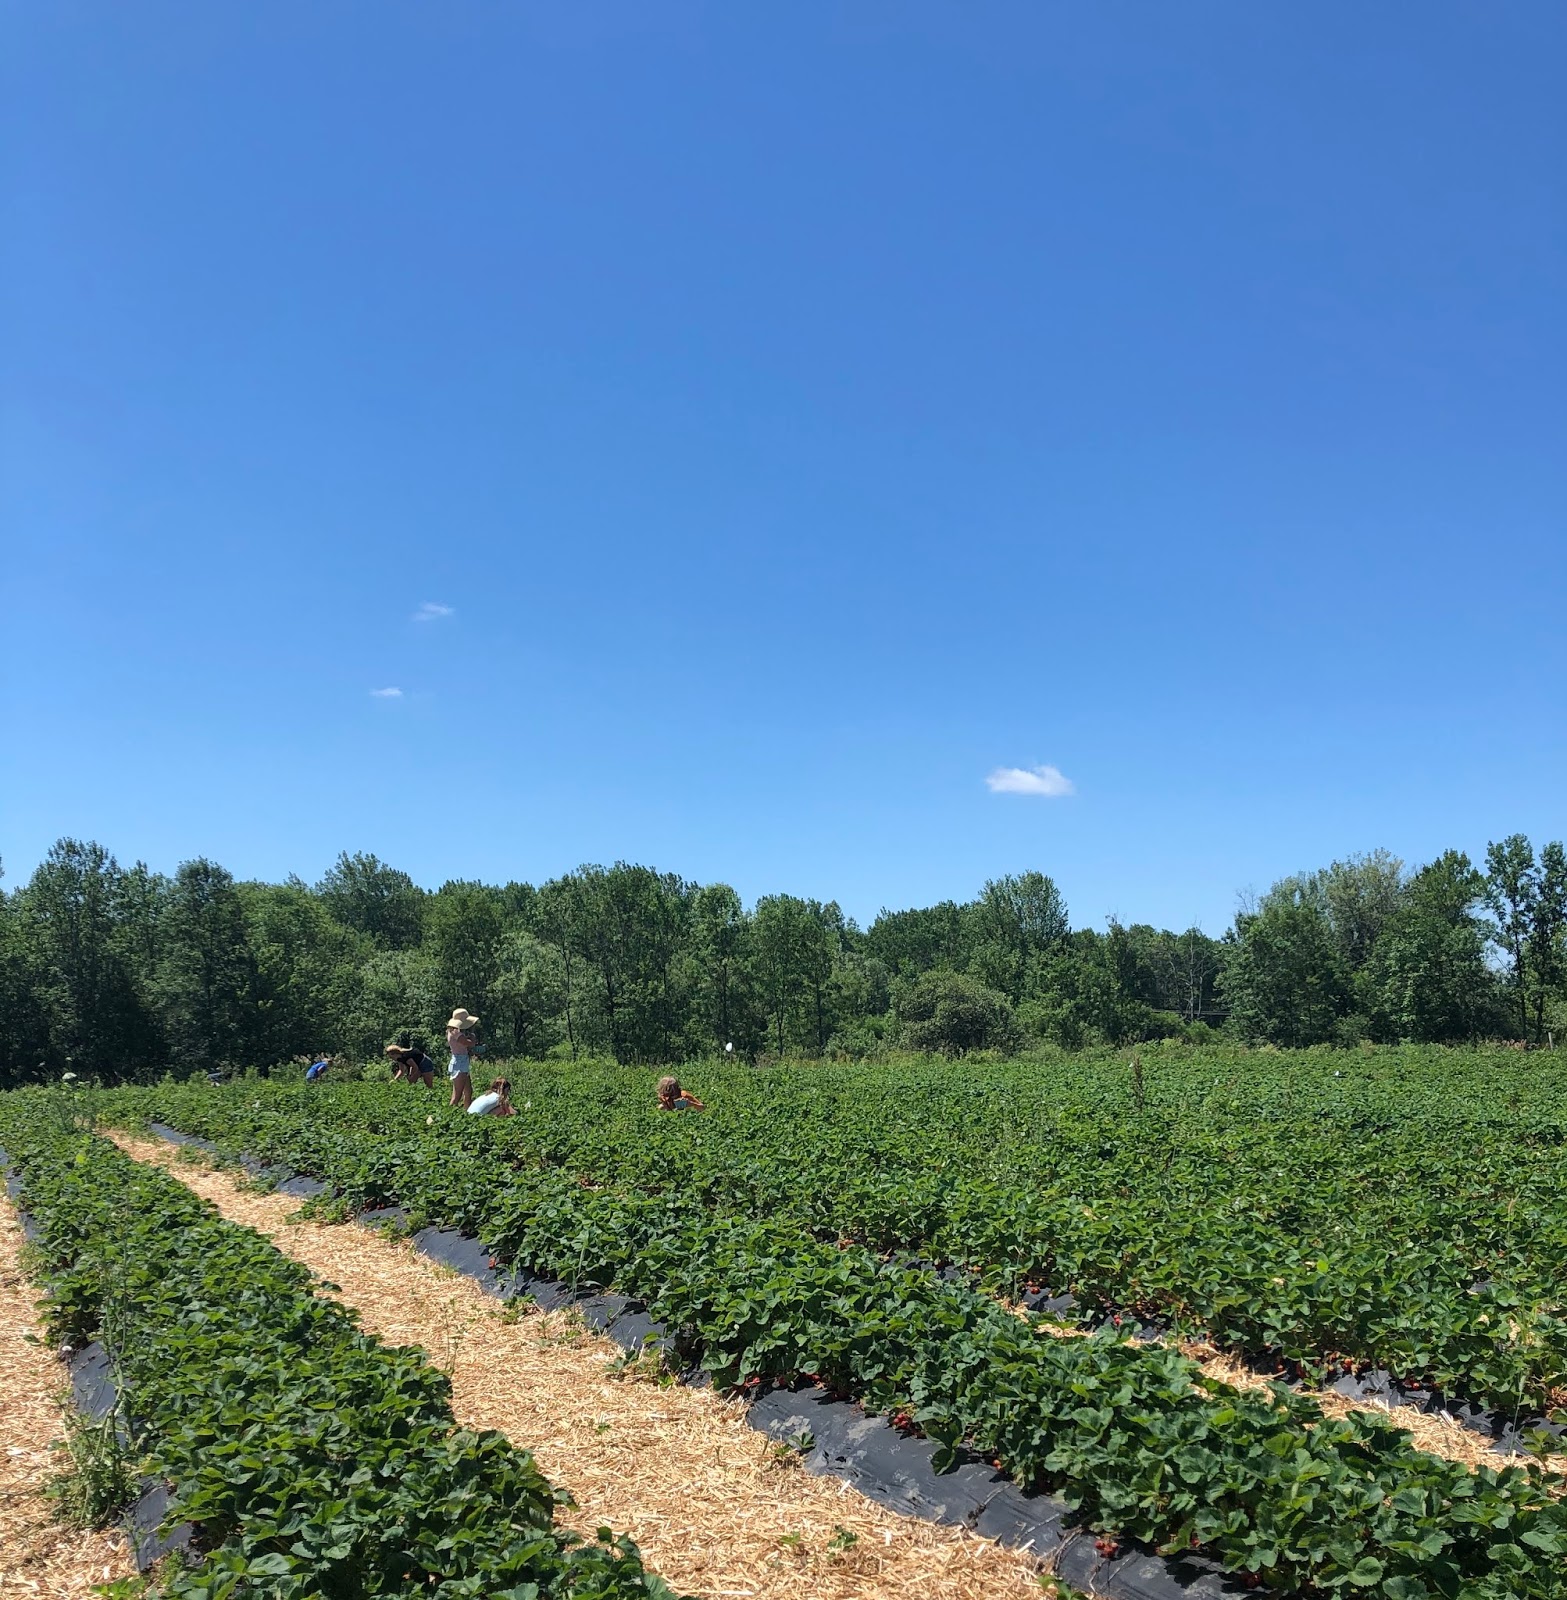 18underoneroof : strawberry fields.forever.